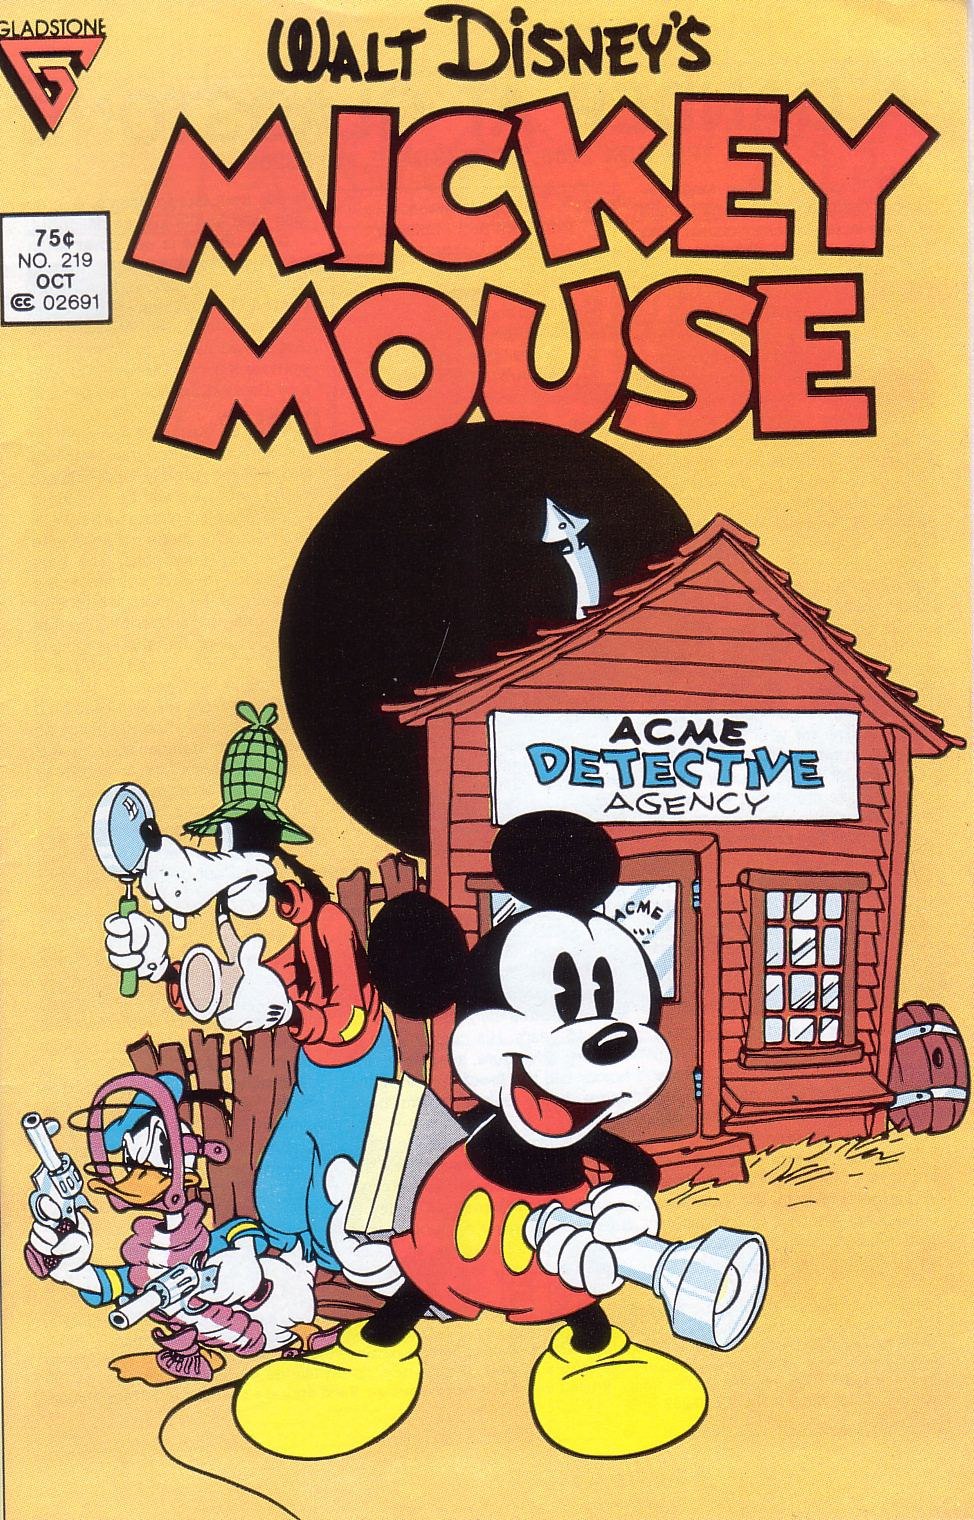 Mickey Mouse Works, Disney Wiki